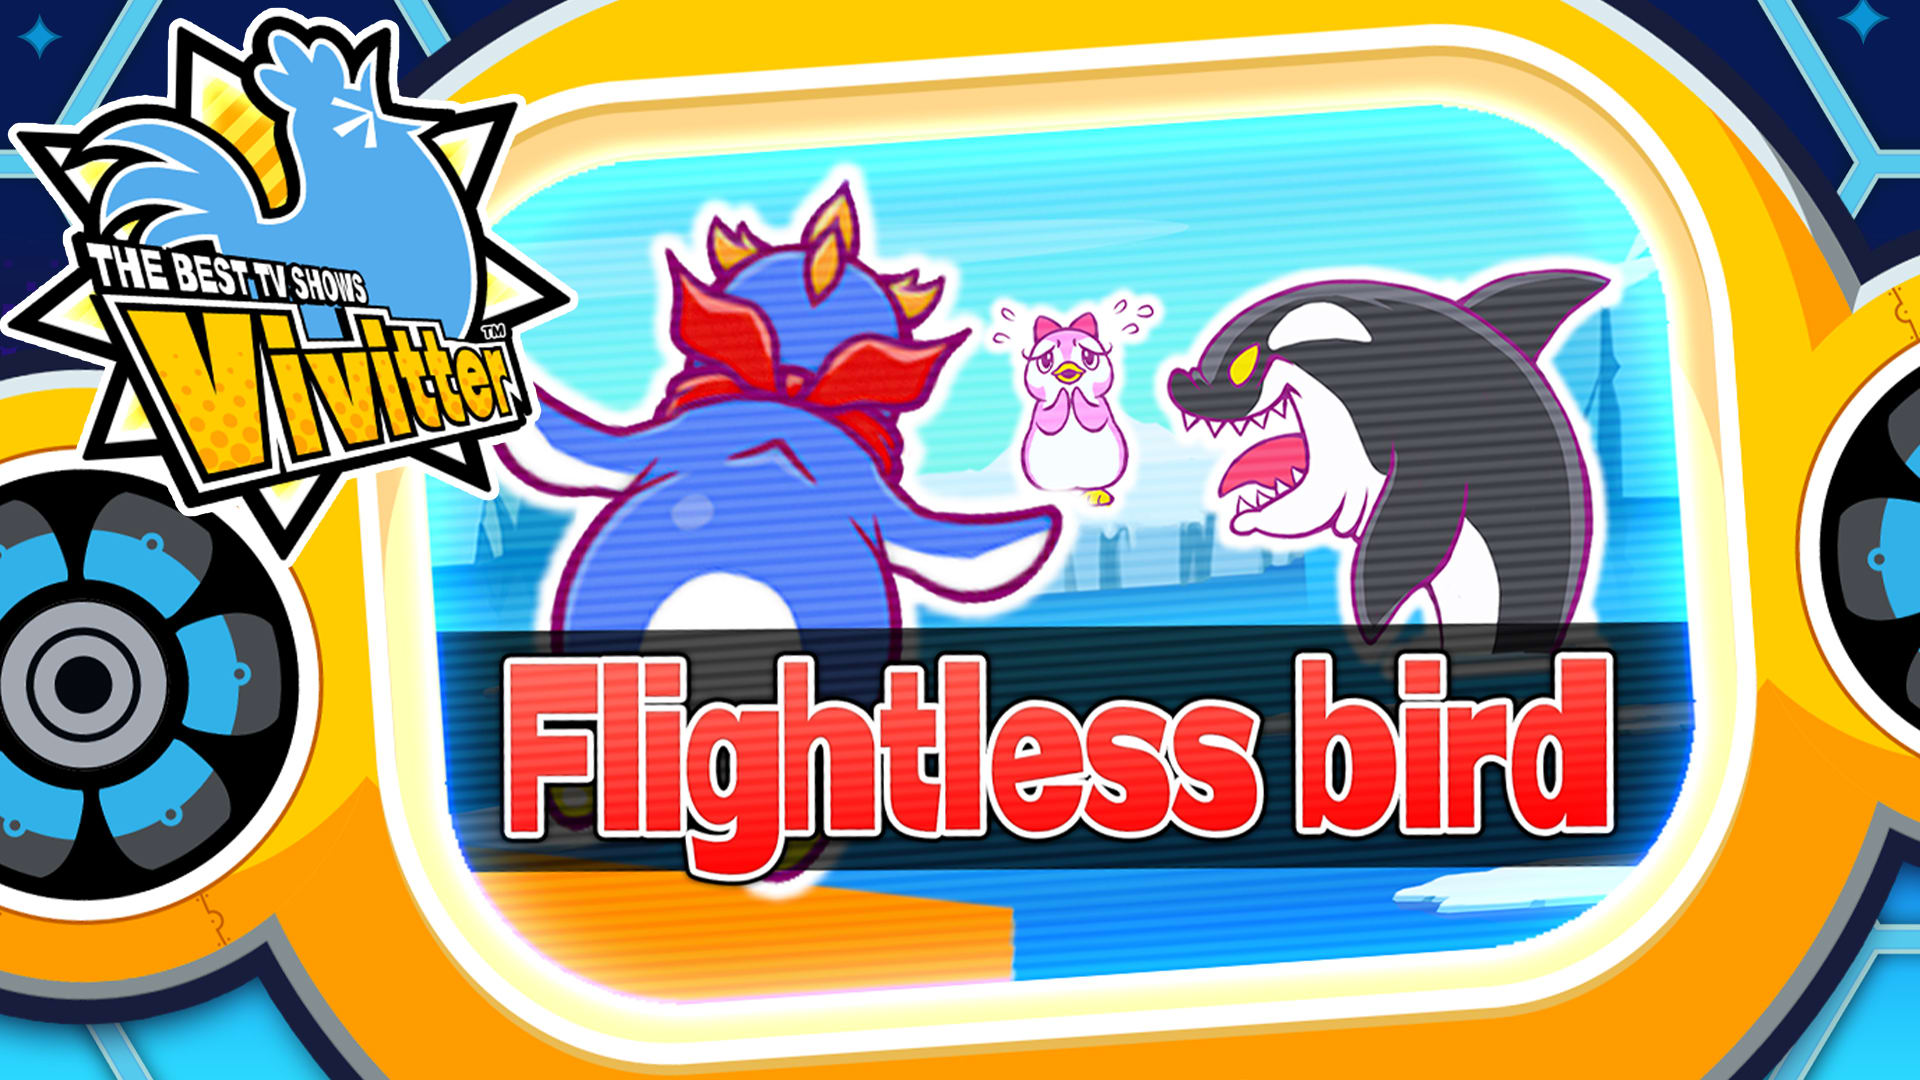 Additional mini-game "Flightless bird"